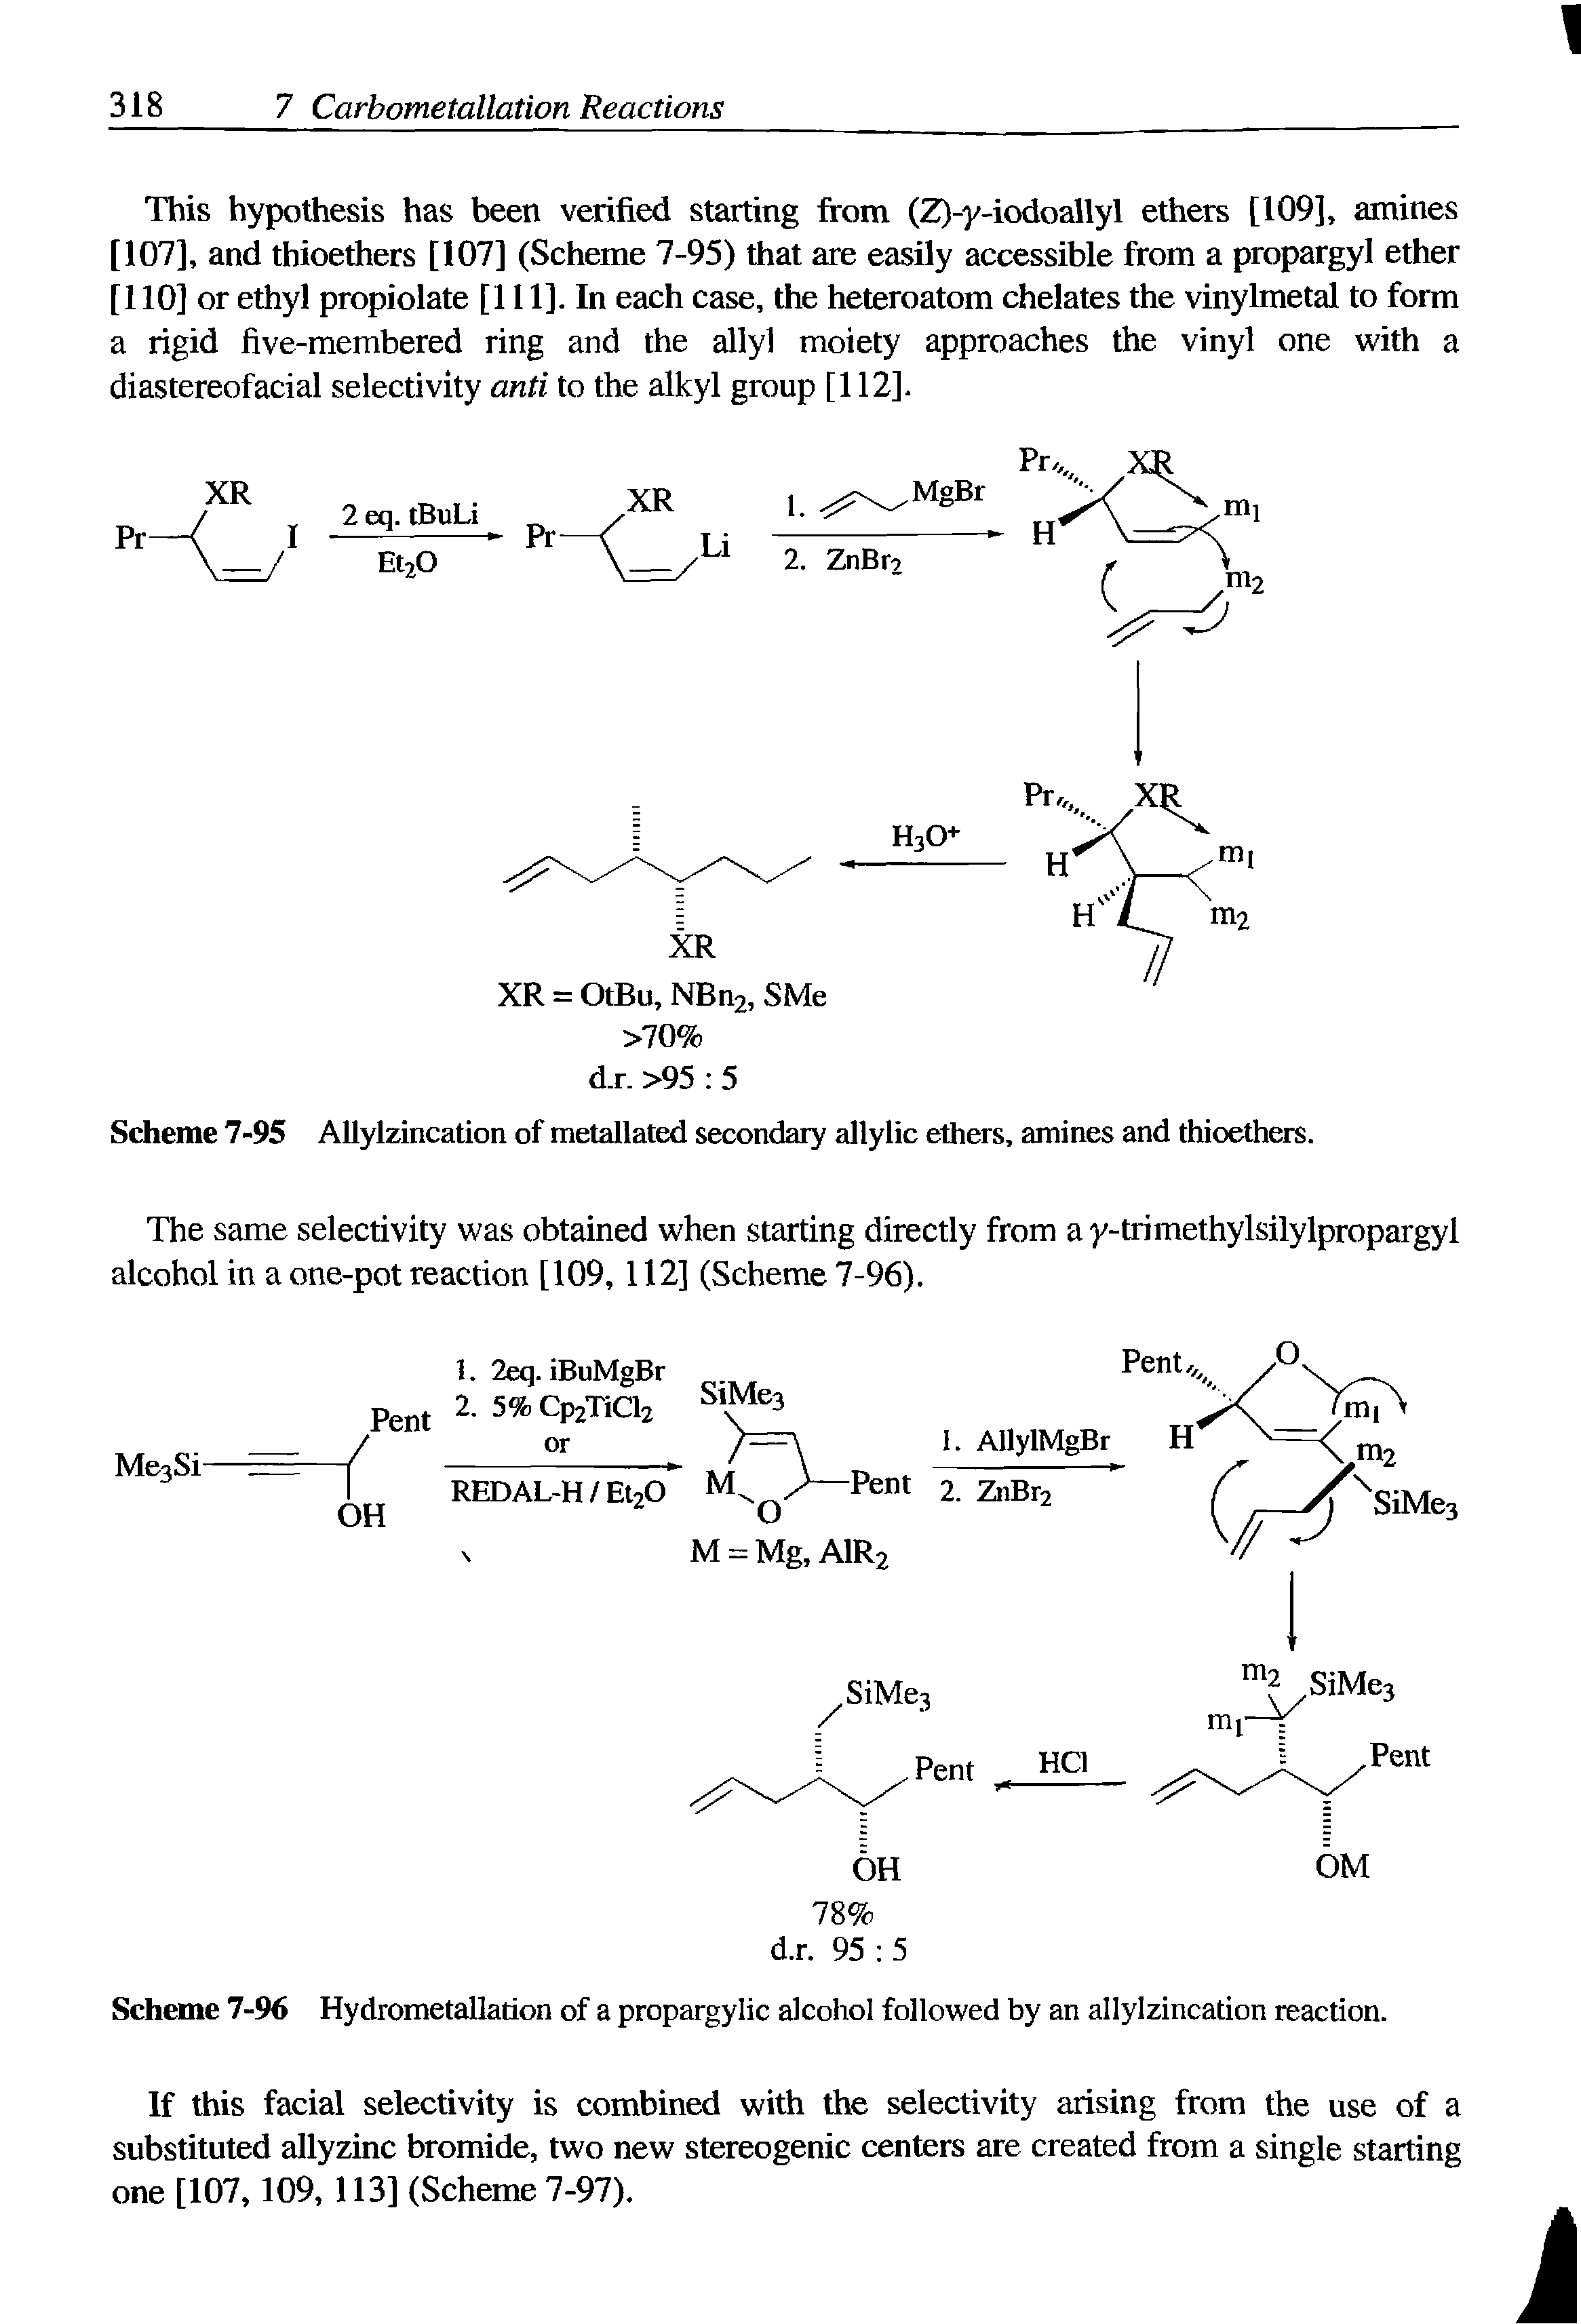 Scheme 7-96 Hydrometallation of a propargylic alcohol followed by an allylzincation reaction.